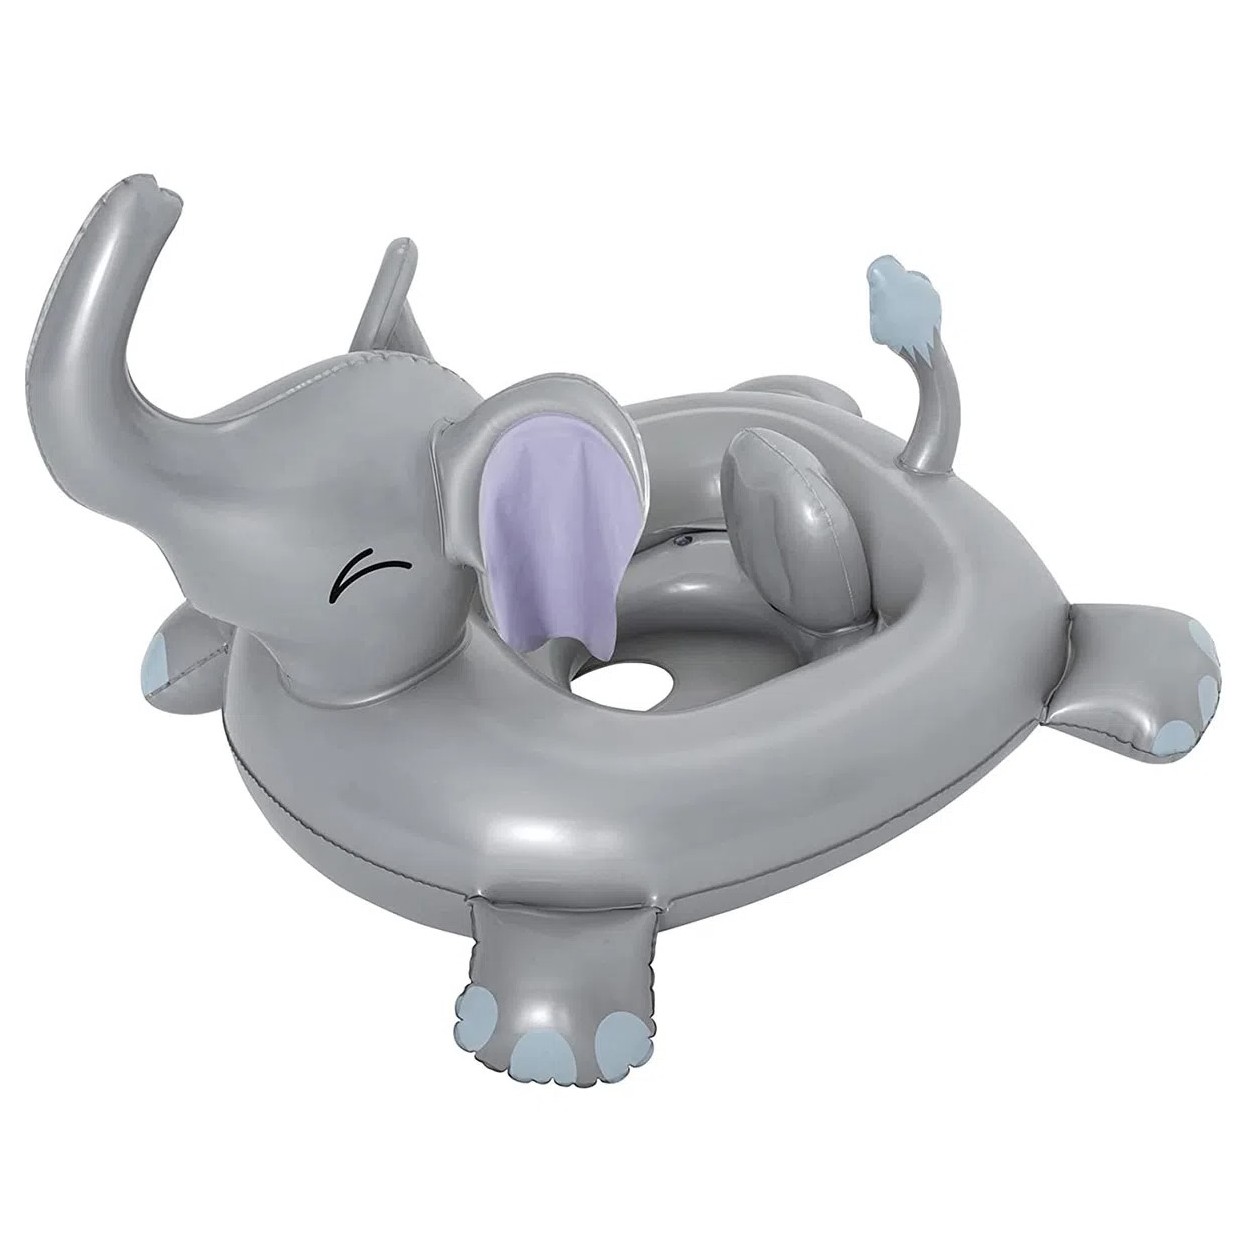 Лодочка надувная Bestway Слоненок с динамиком (34152) надувная игрушка bestway слоненок 96х84cm 34152 bw